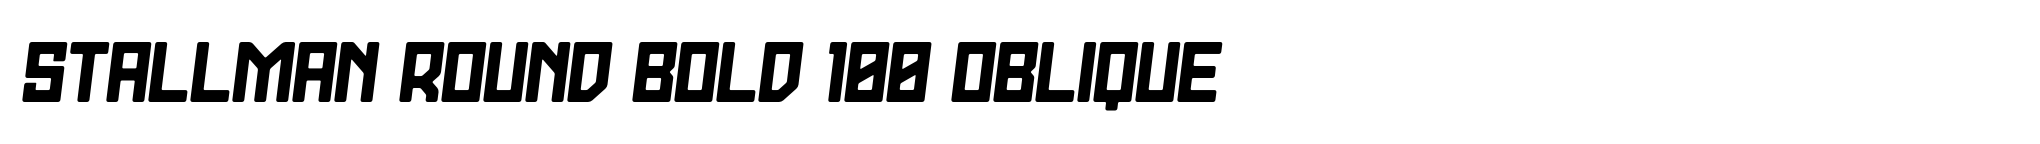 Stallman Round Bold 100 Oblique image